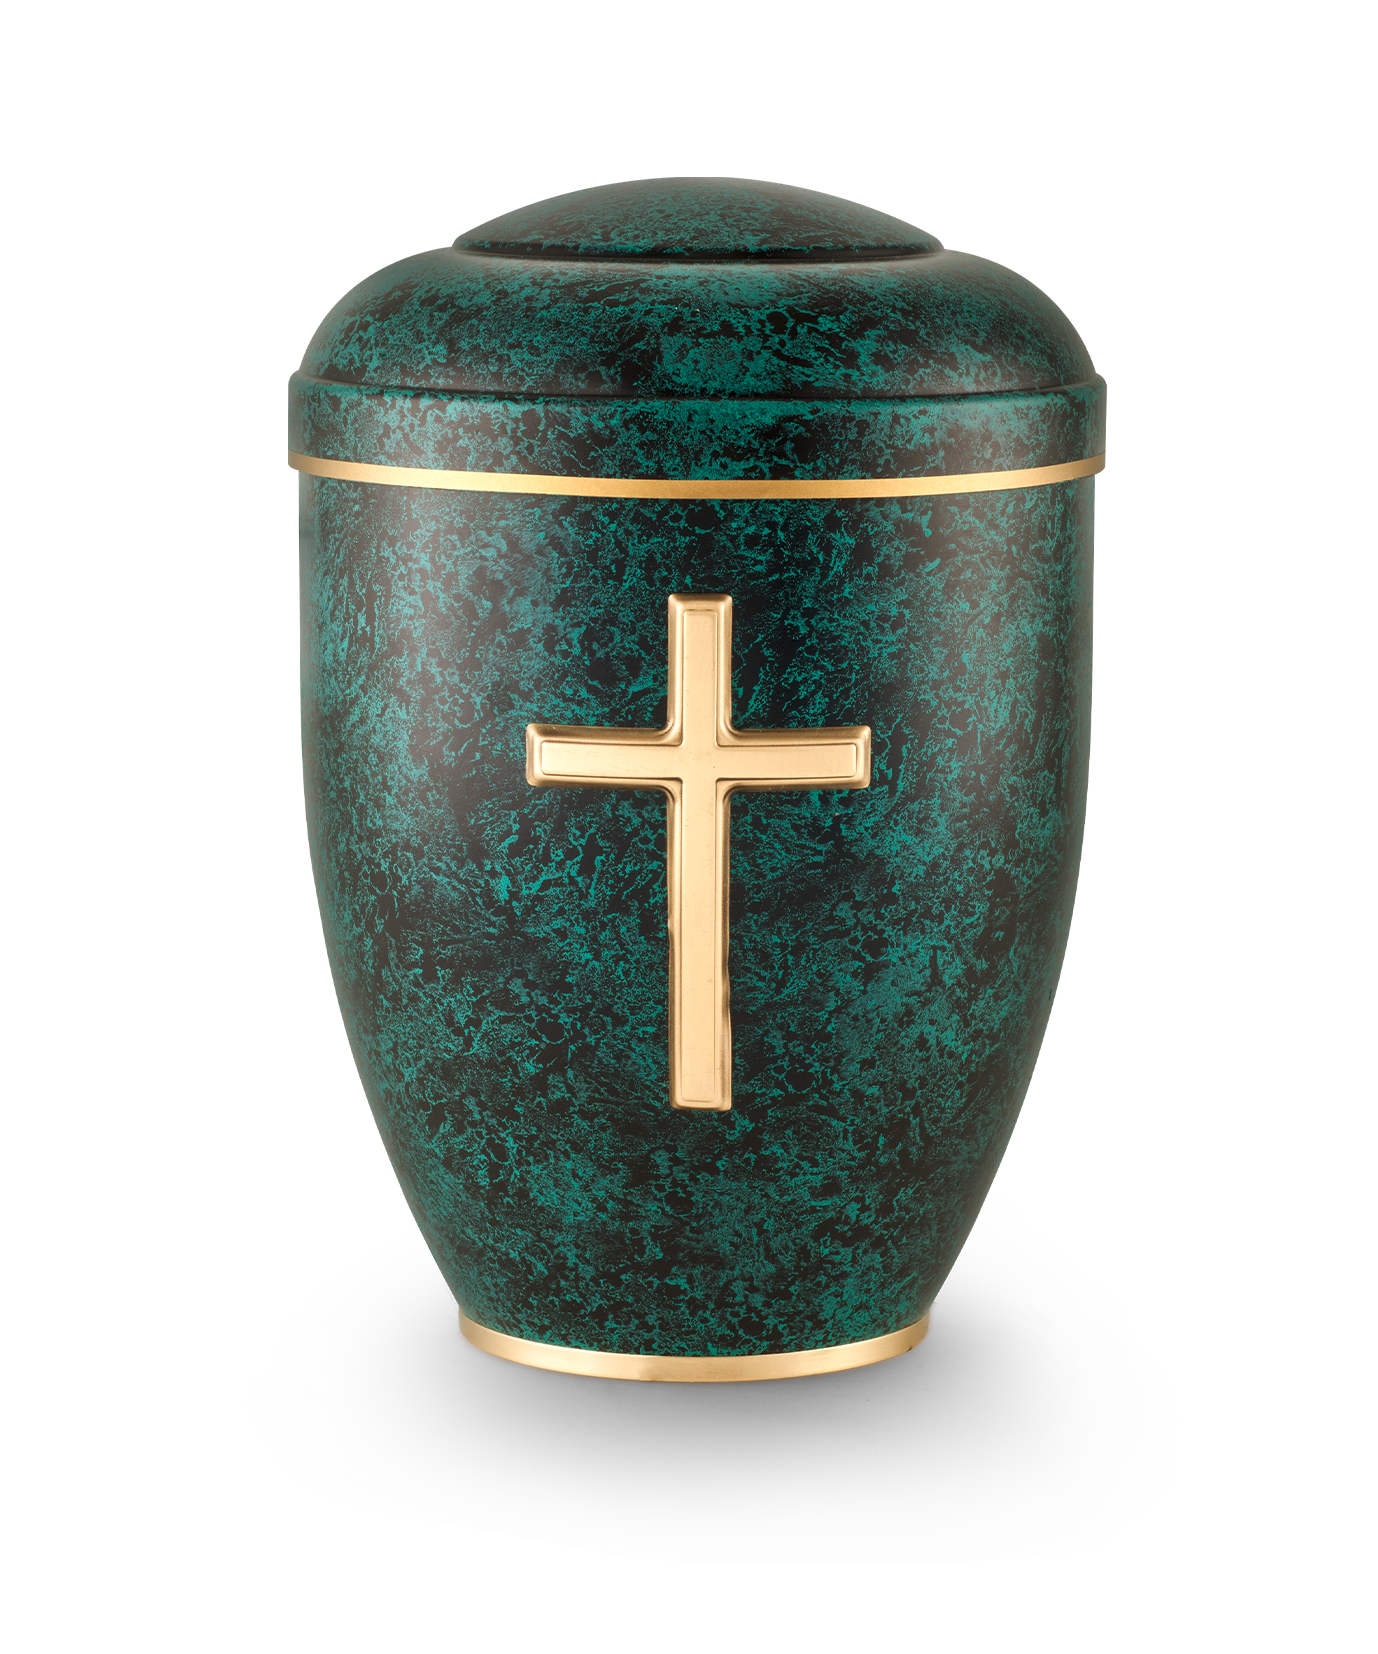 Völsing urn Edition Rustica hand-colored